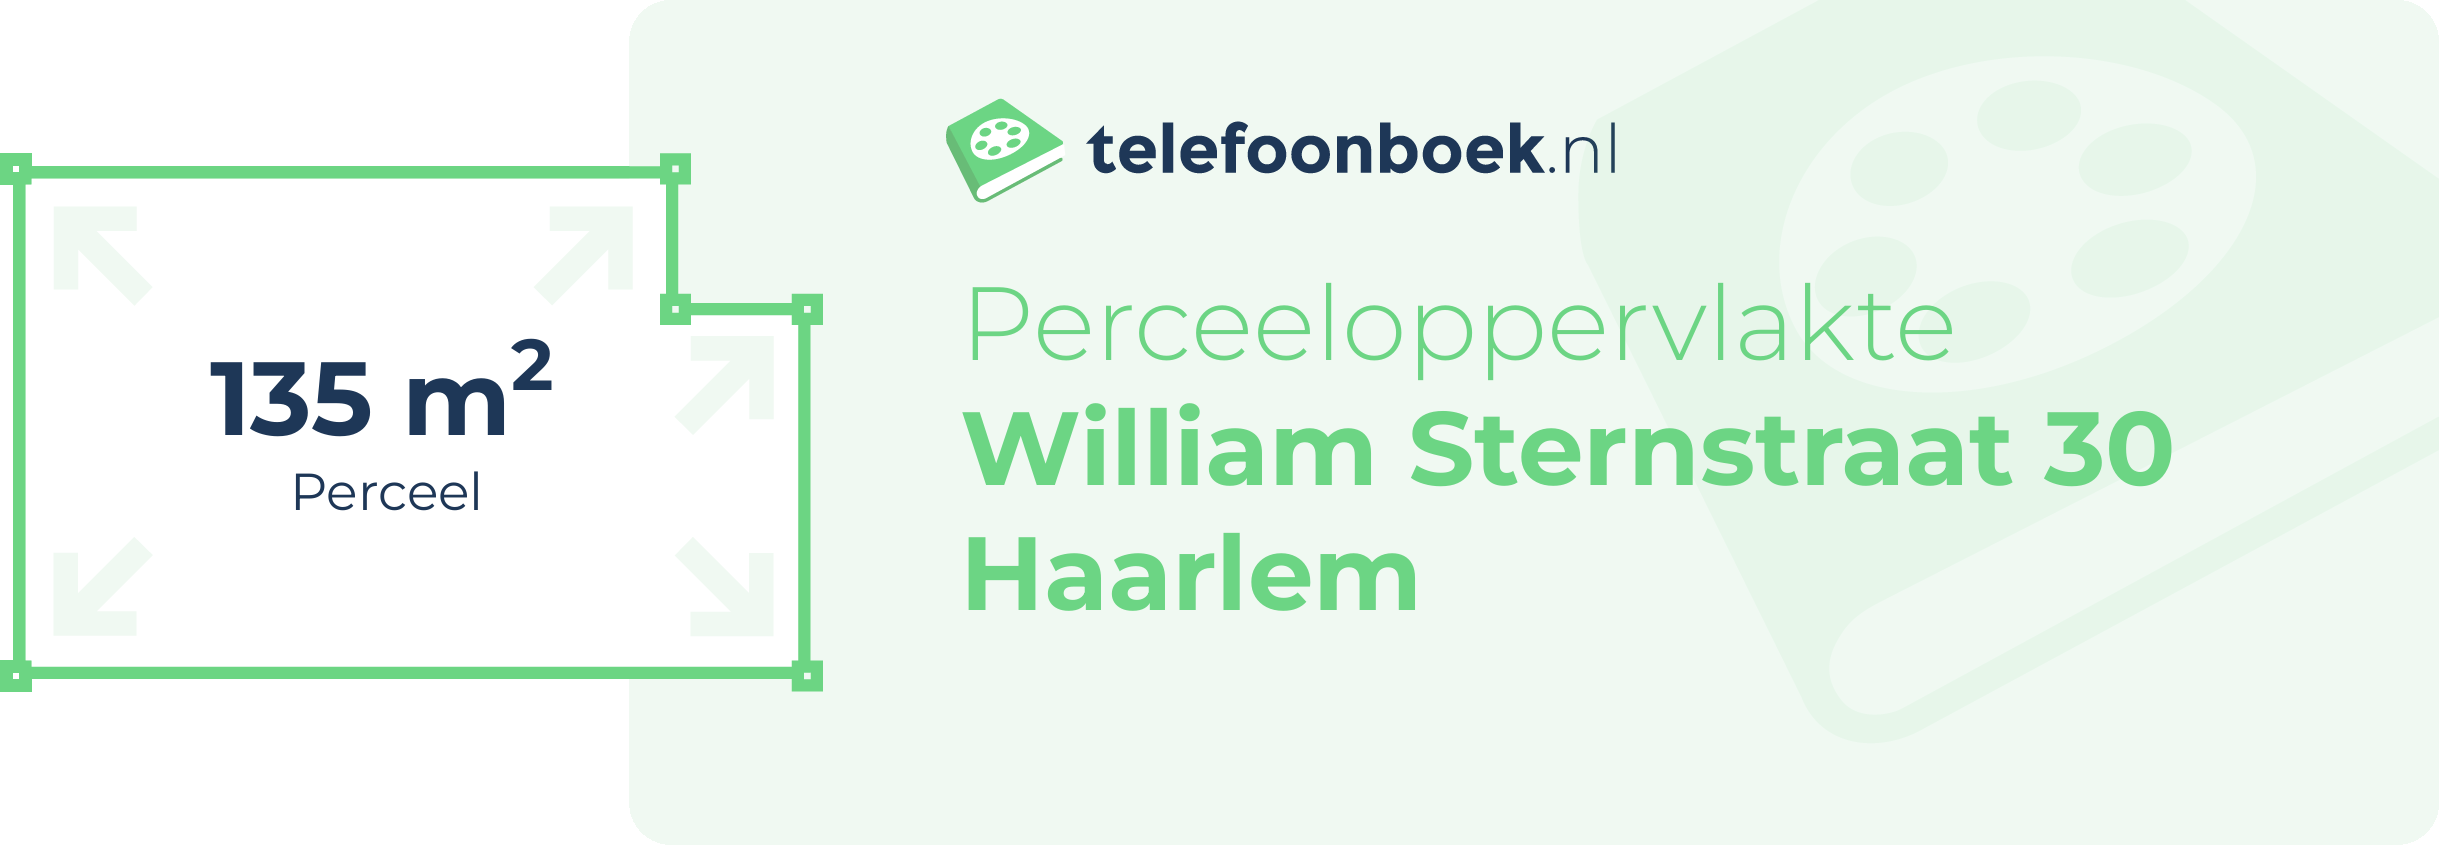 Perceeloppervlakte William Sternstraat 30 Haarlem